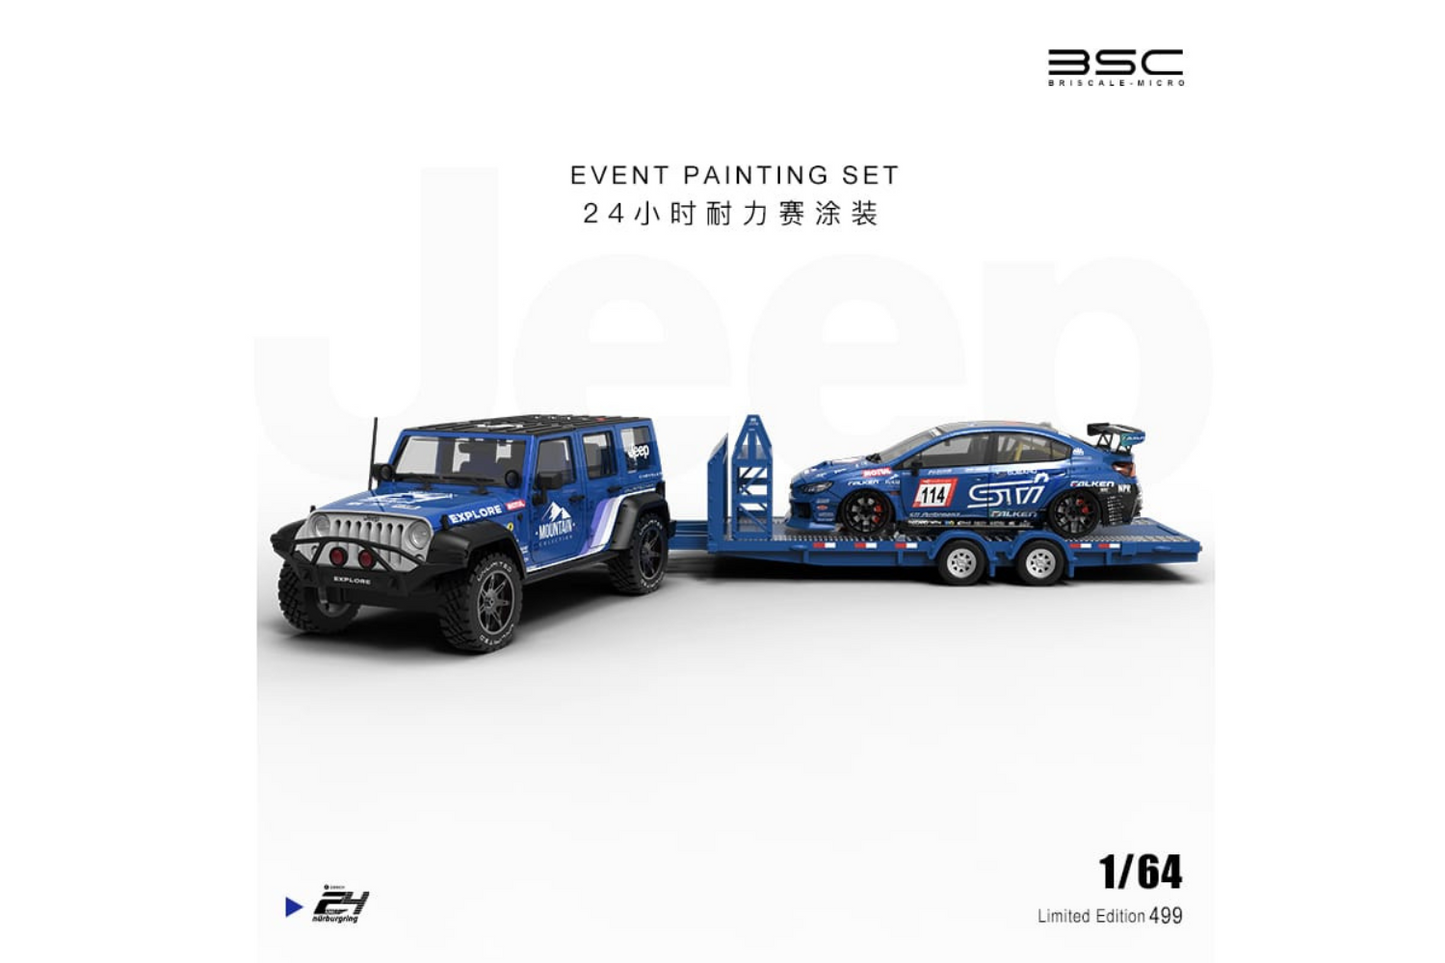 BSC 1/64 Subaru WRX STI - Jeep Wrangler - Trailer & Repairmen Set in Subaru Event Livery